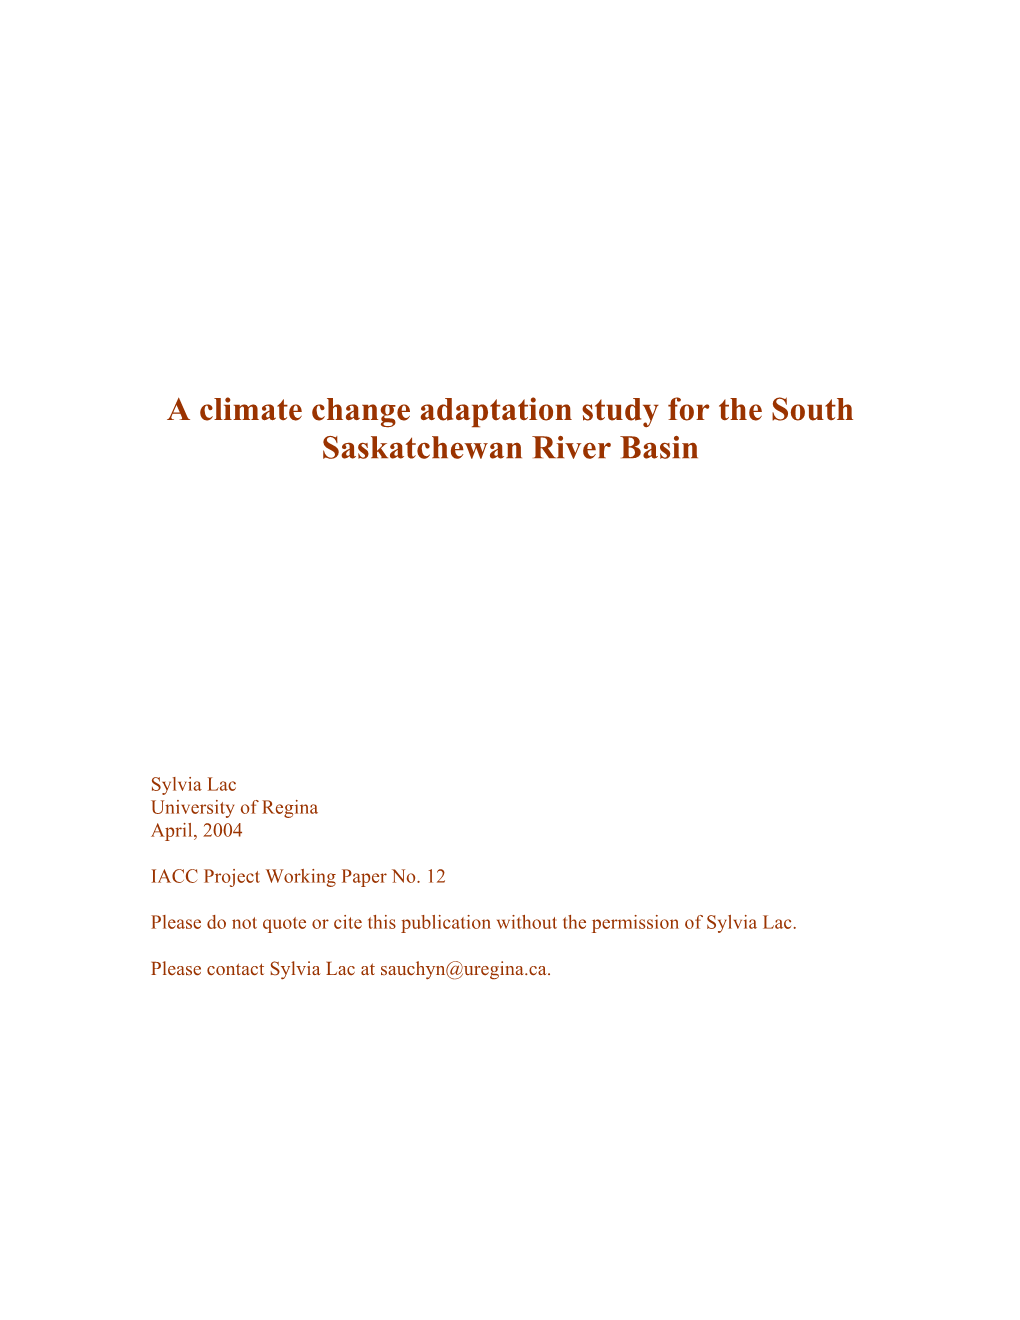 A Climate Change Adaptation Study for the South Saskatchewan River Basin